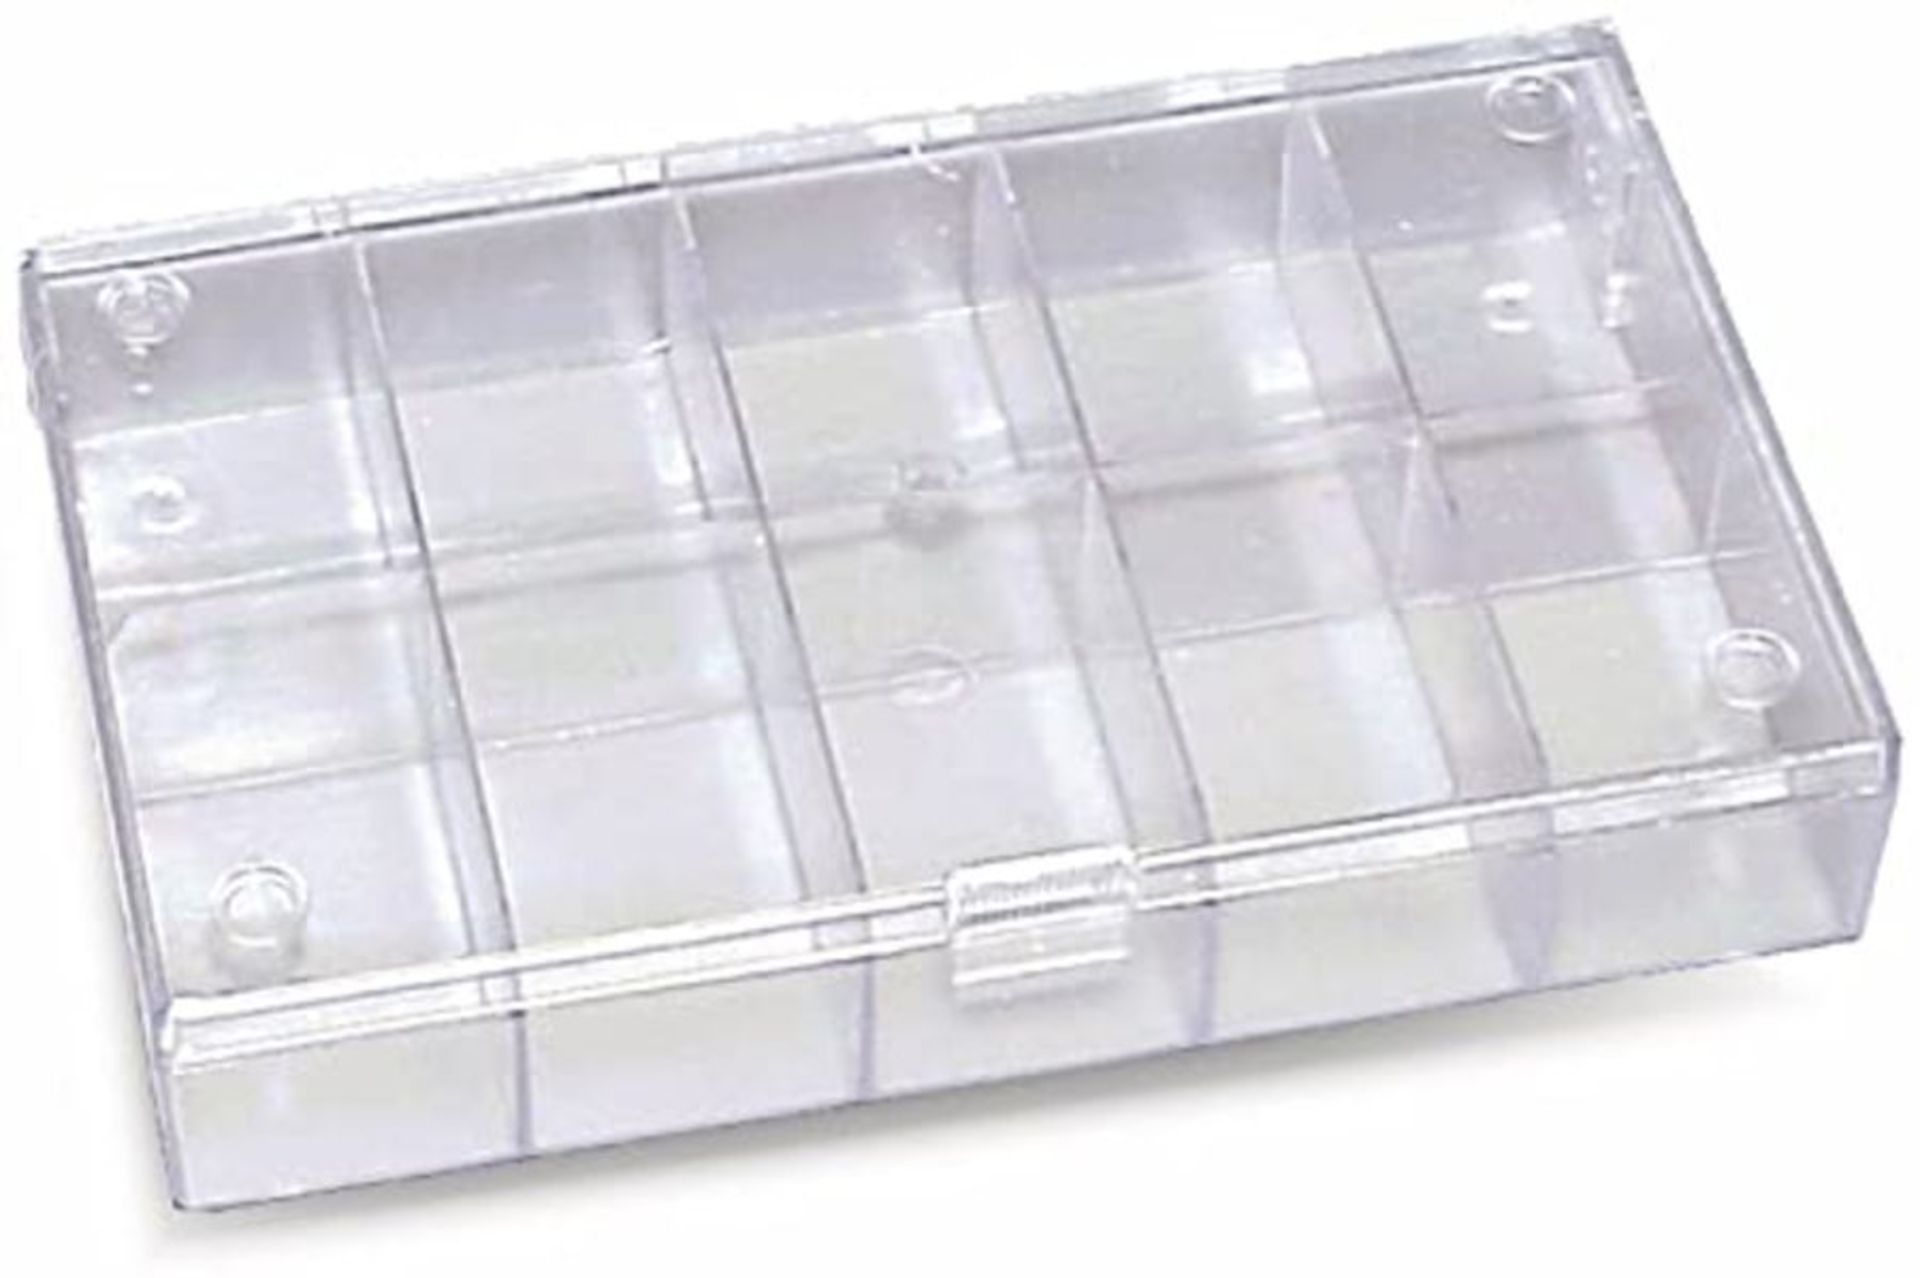 Hipner dowel assortment box (L x W x H) 164 x 31 x 101 mm, number of compartments: 10